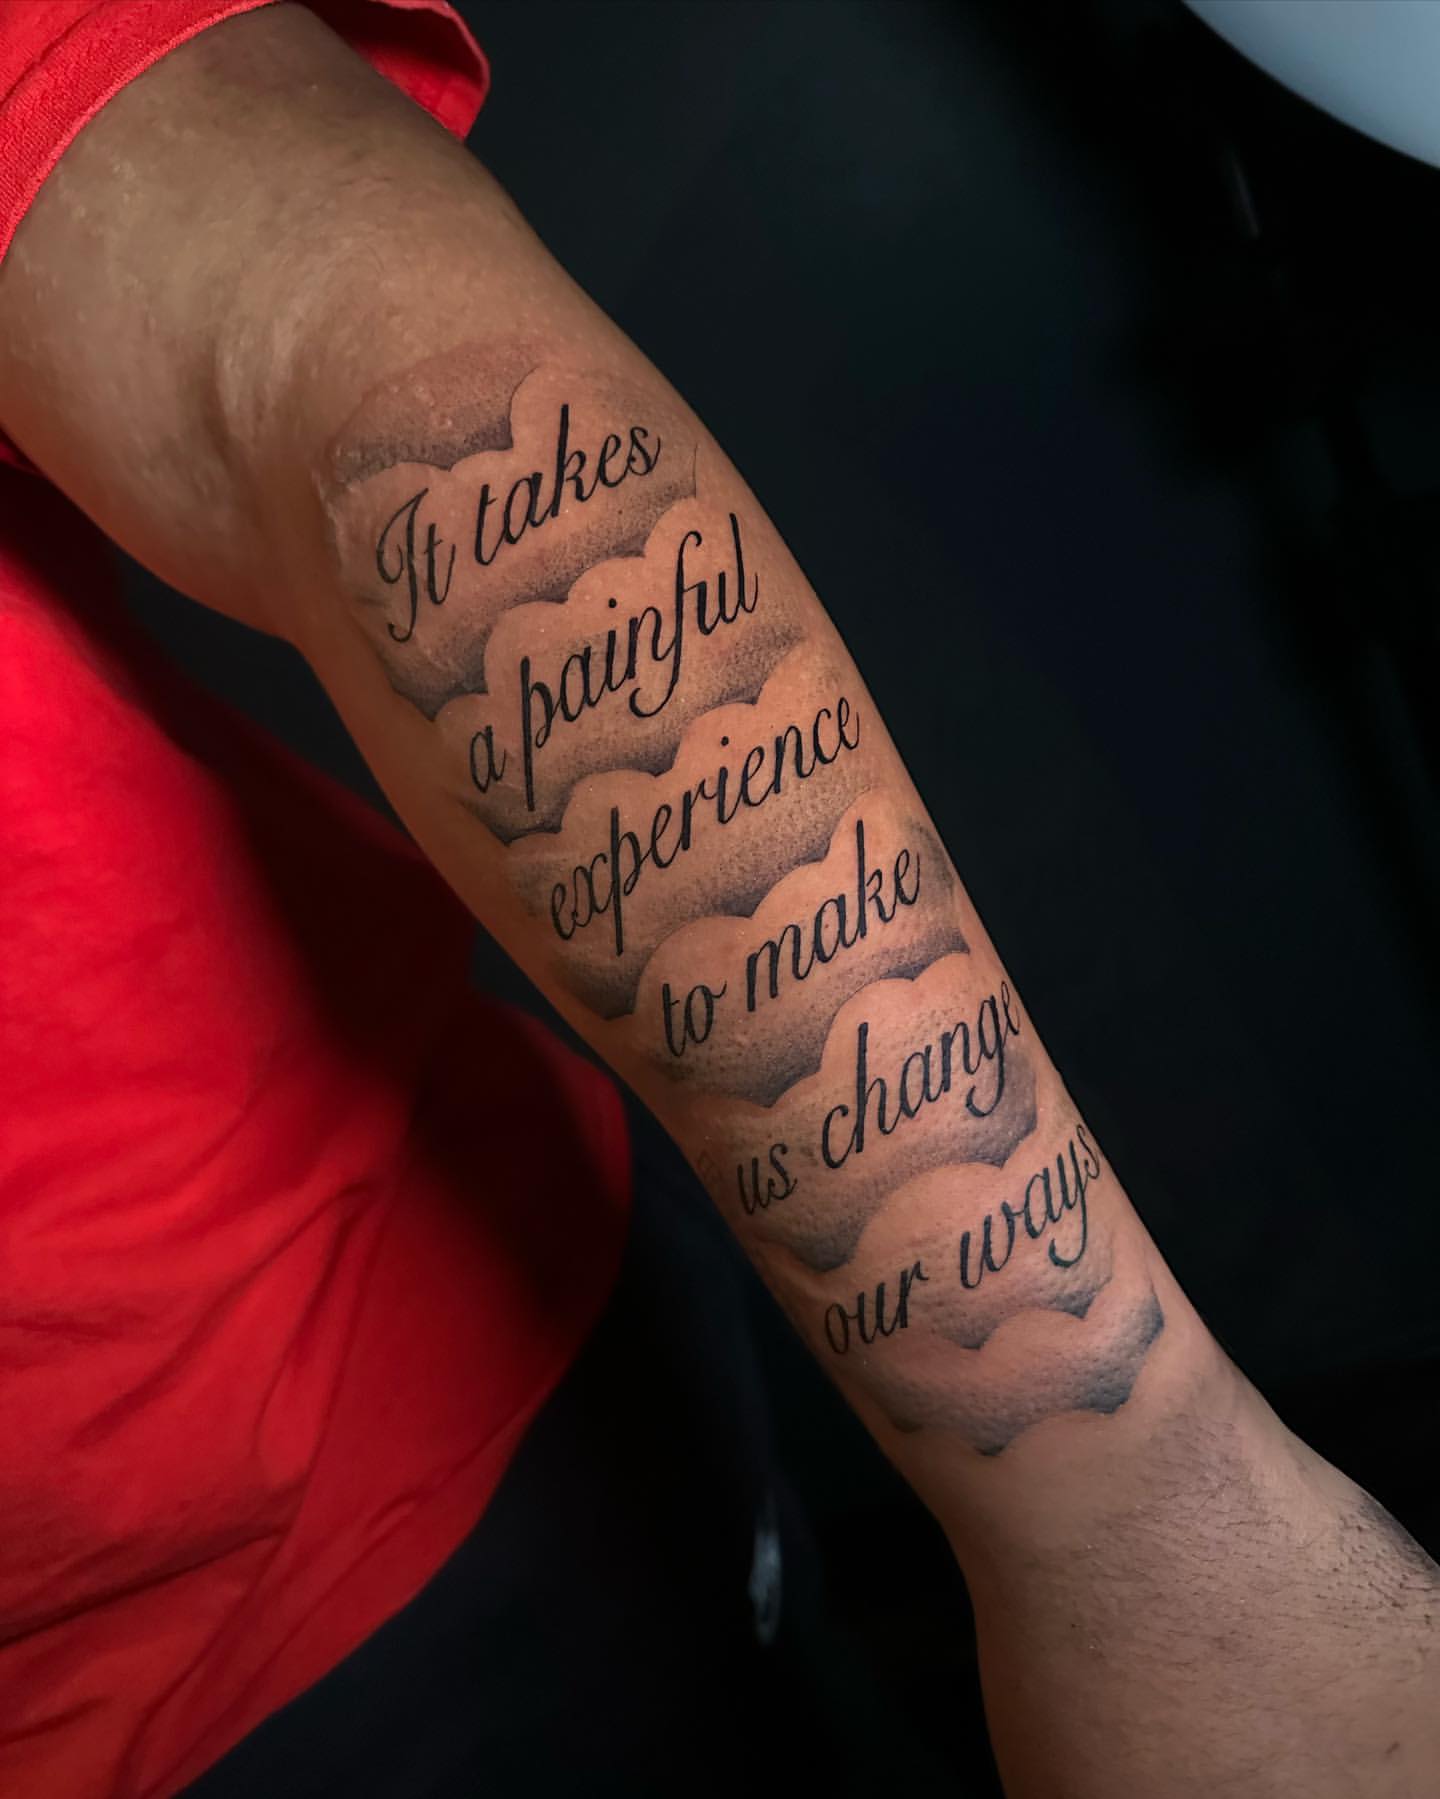 Side tattoo saying 